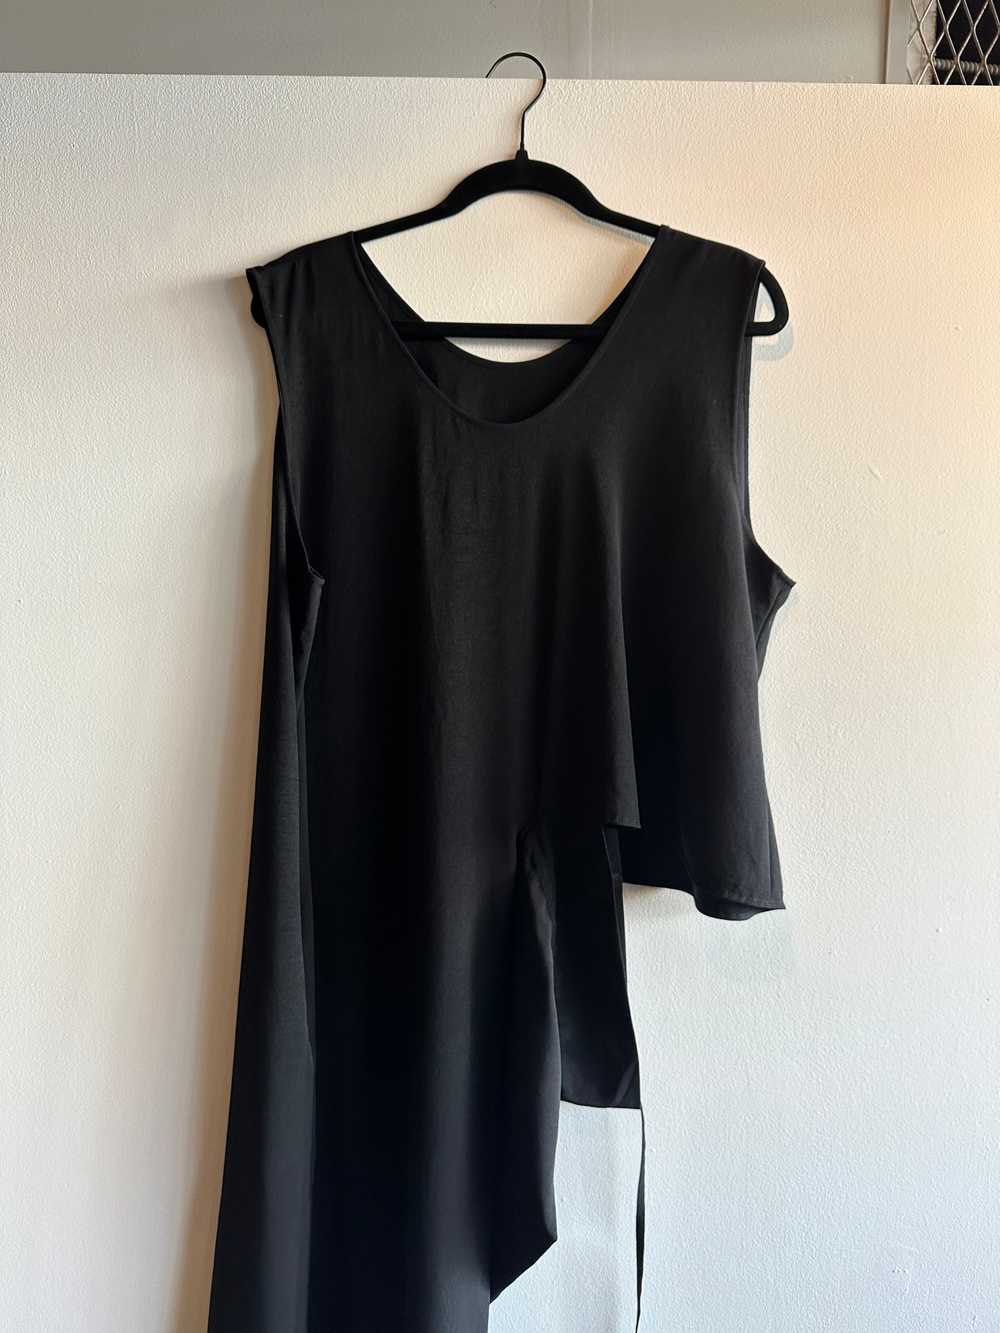 Michiko by Y’s Black Cutout Sleeveless Dress - image 1